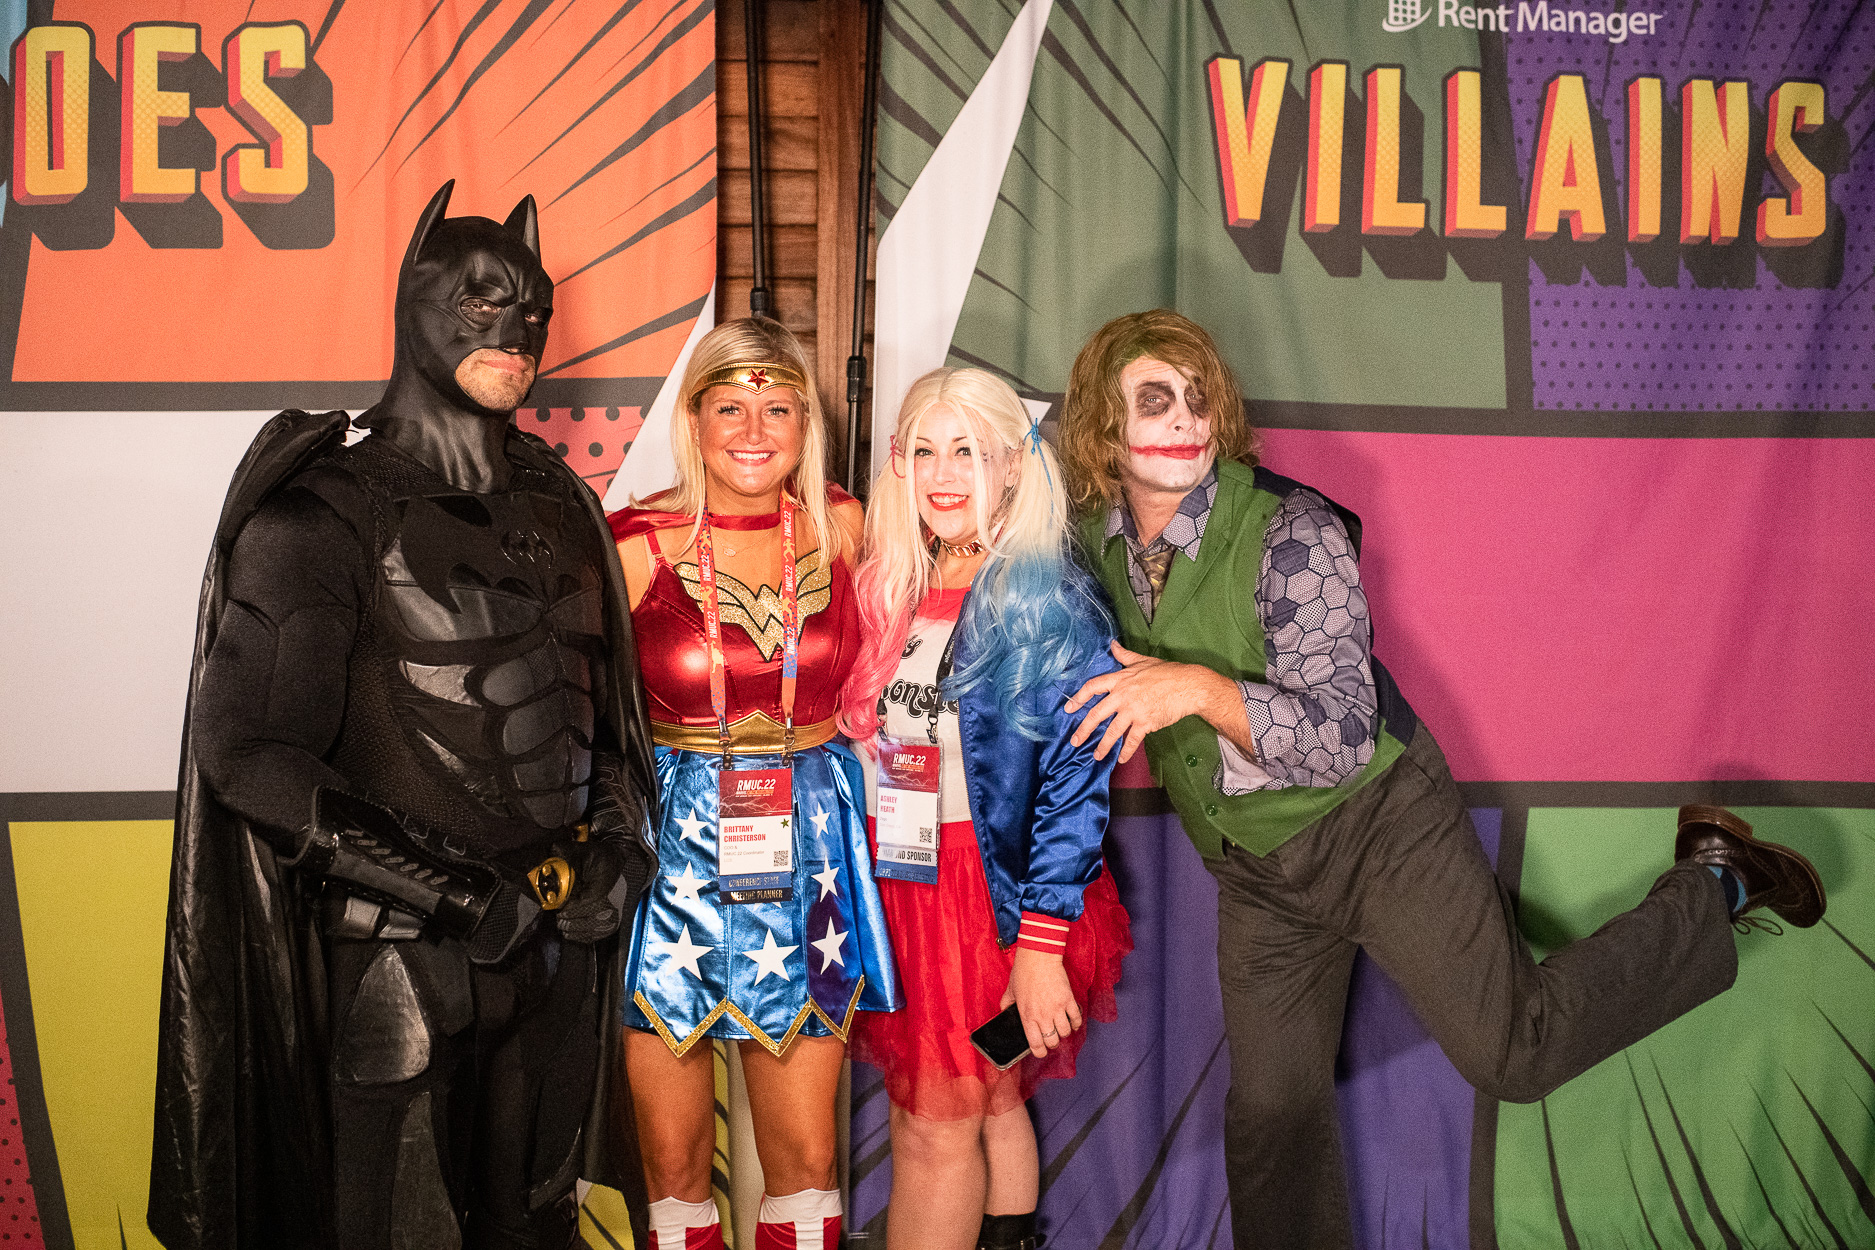 Batman, Wonder woman, Harley Quinn, and Joker costumes